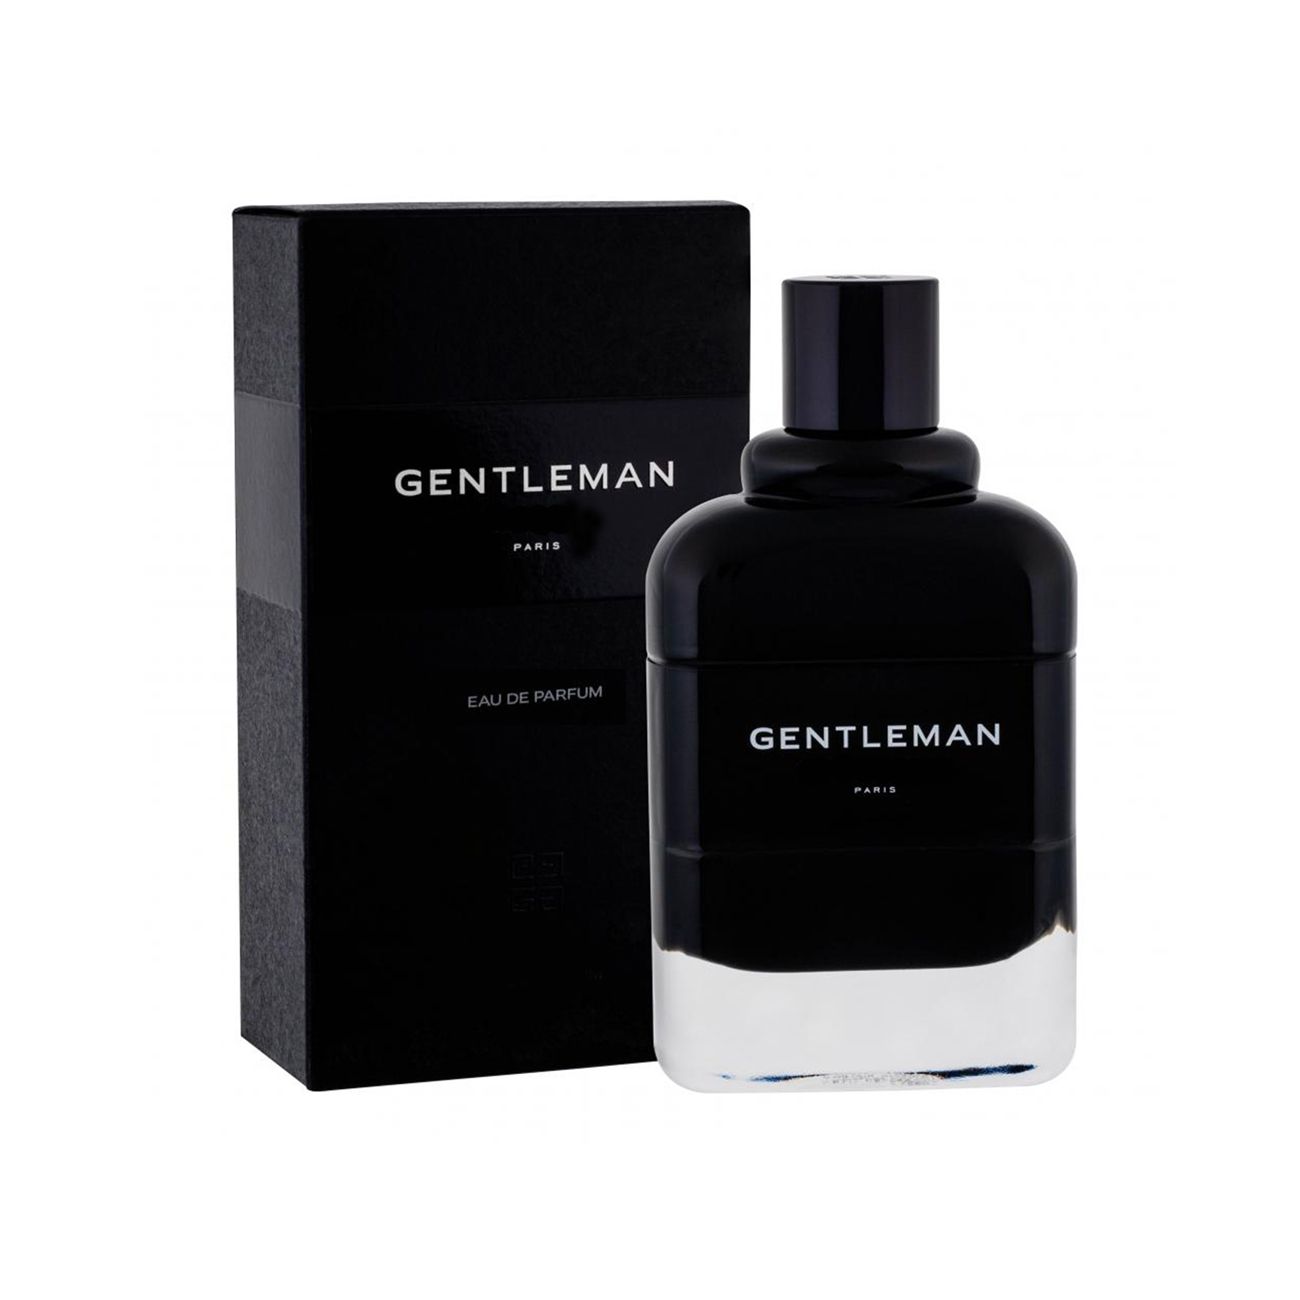 Givenchy Gentleman EDP 50ml. Givenchy Gentleman Paris Парфюм. Givenchy Gentleman Society Eau de Parfum. Givenchy Gentleman 2018.